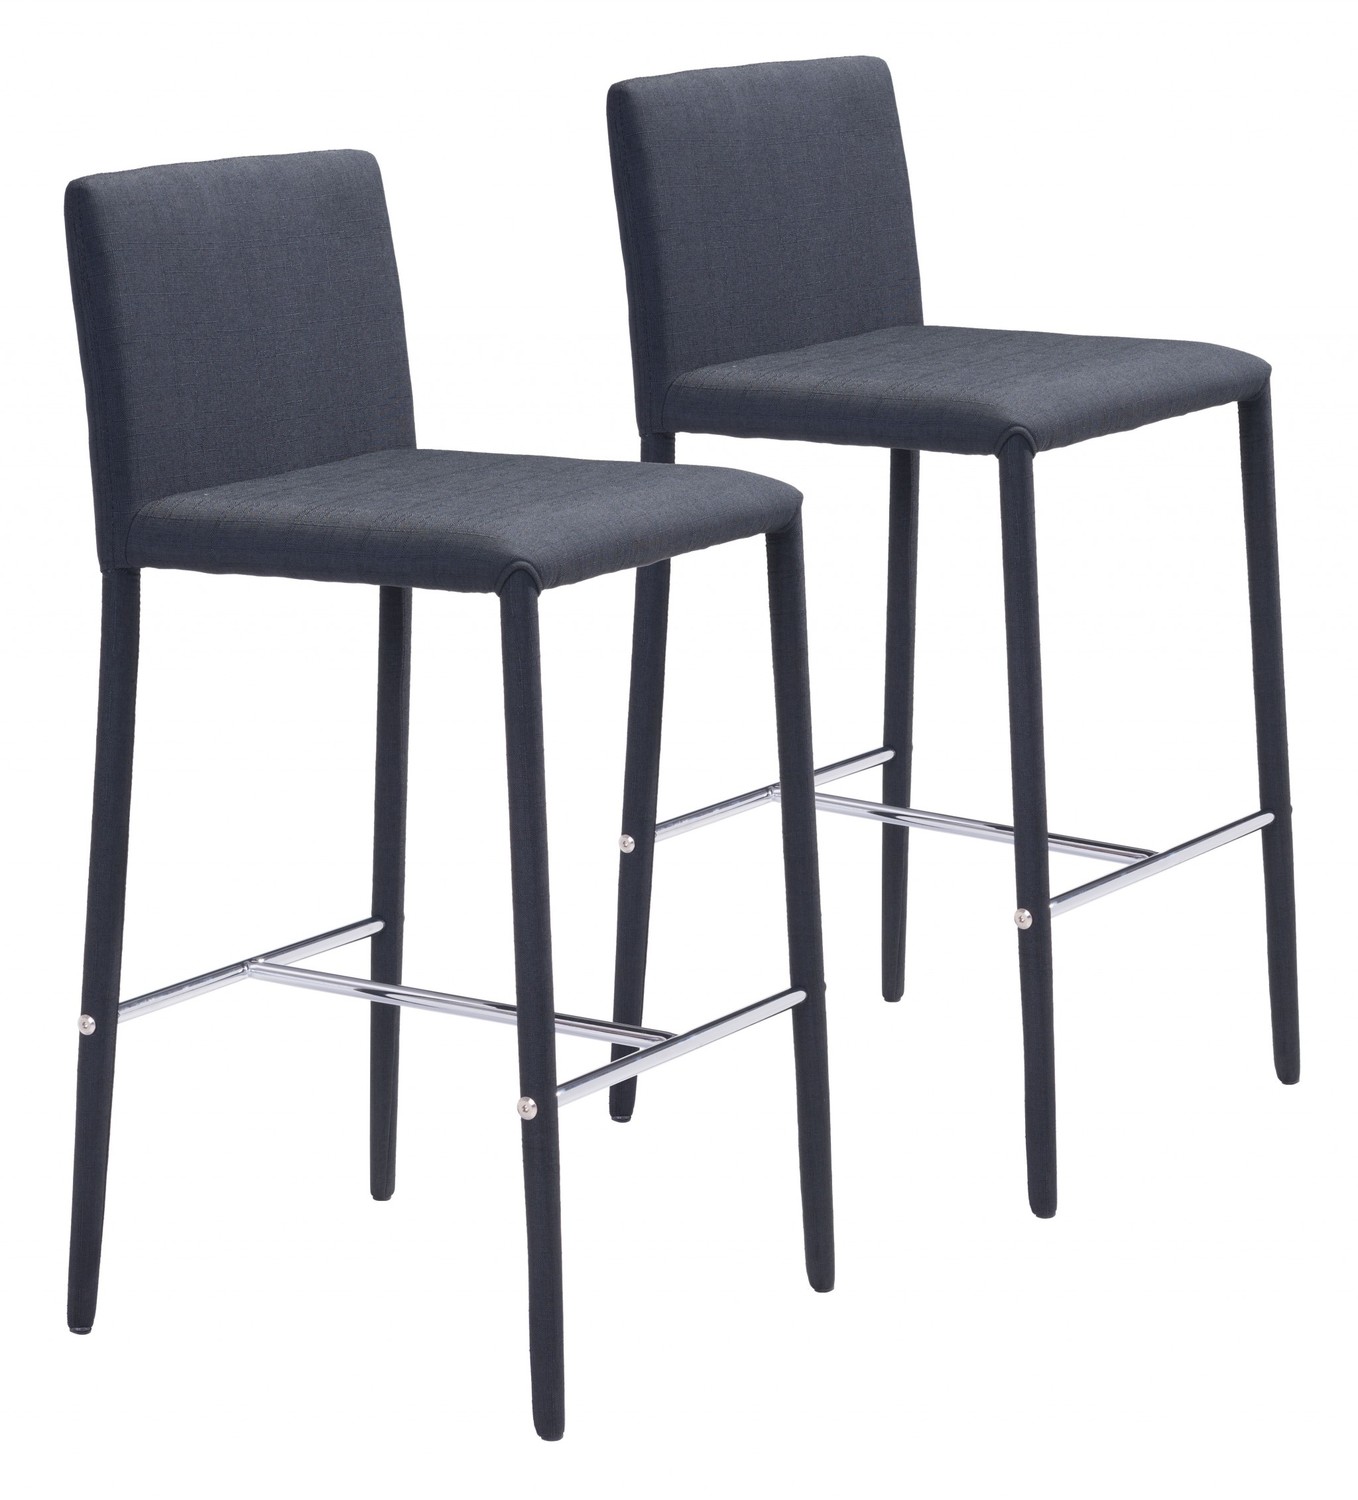 Set of Two Black Restaurant Quality Sleek Bar Chairs